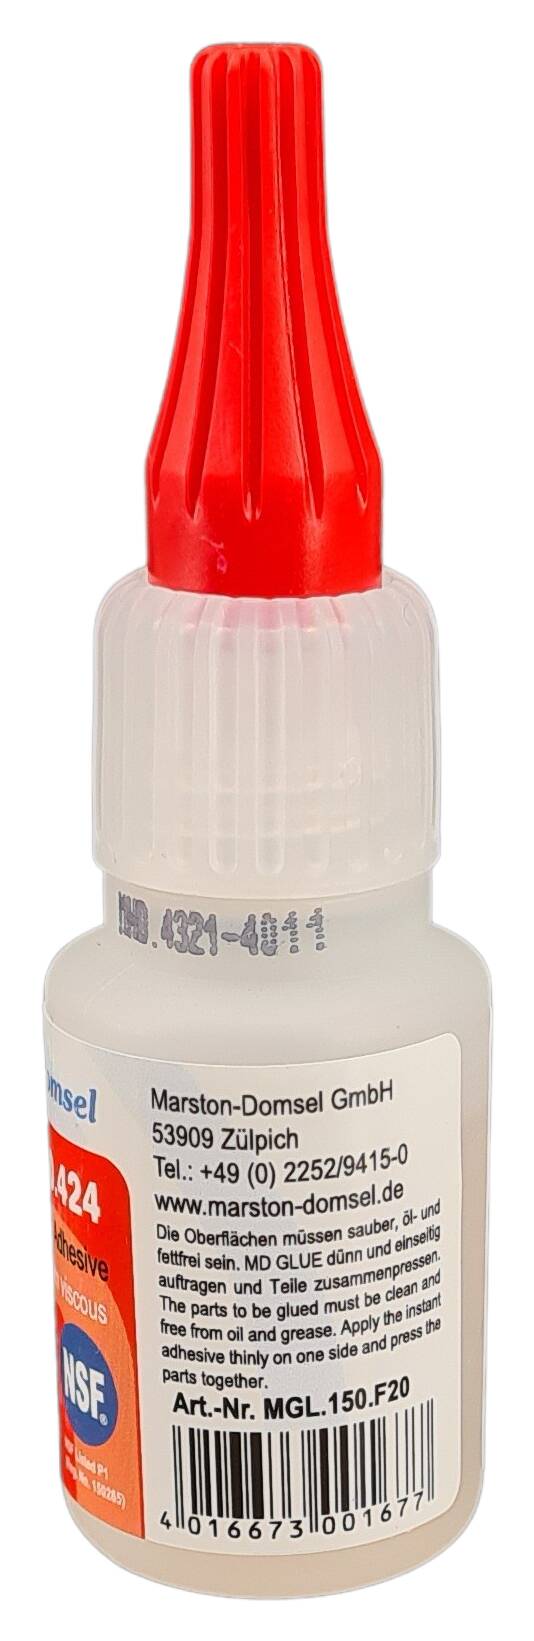 MD-Glue MD 150 á 20 gr. Universalkleber mittelviskos